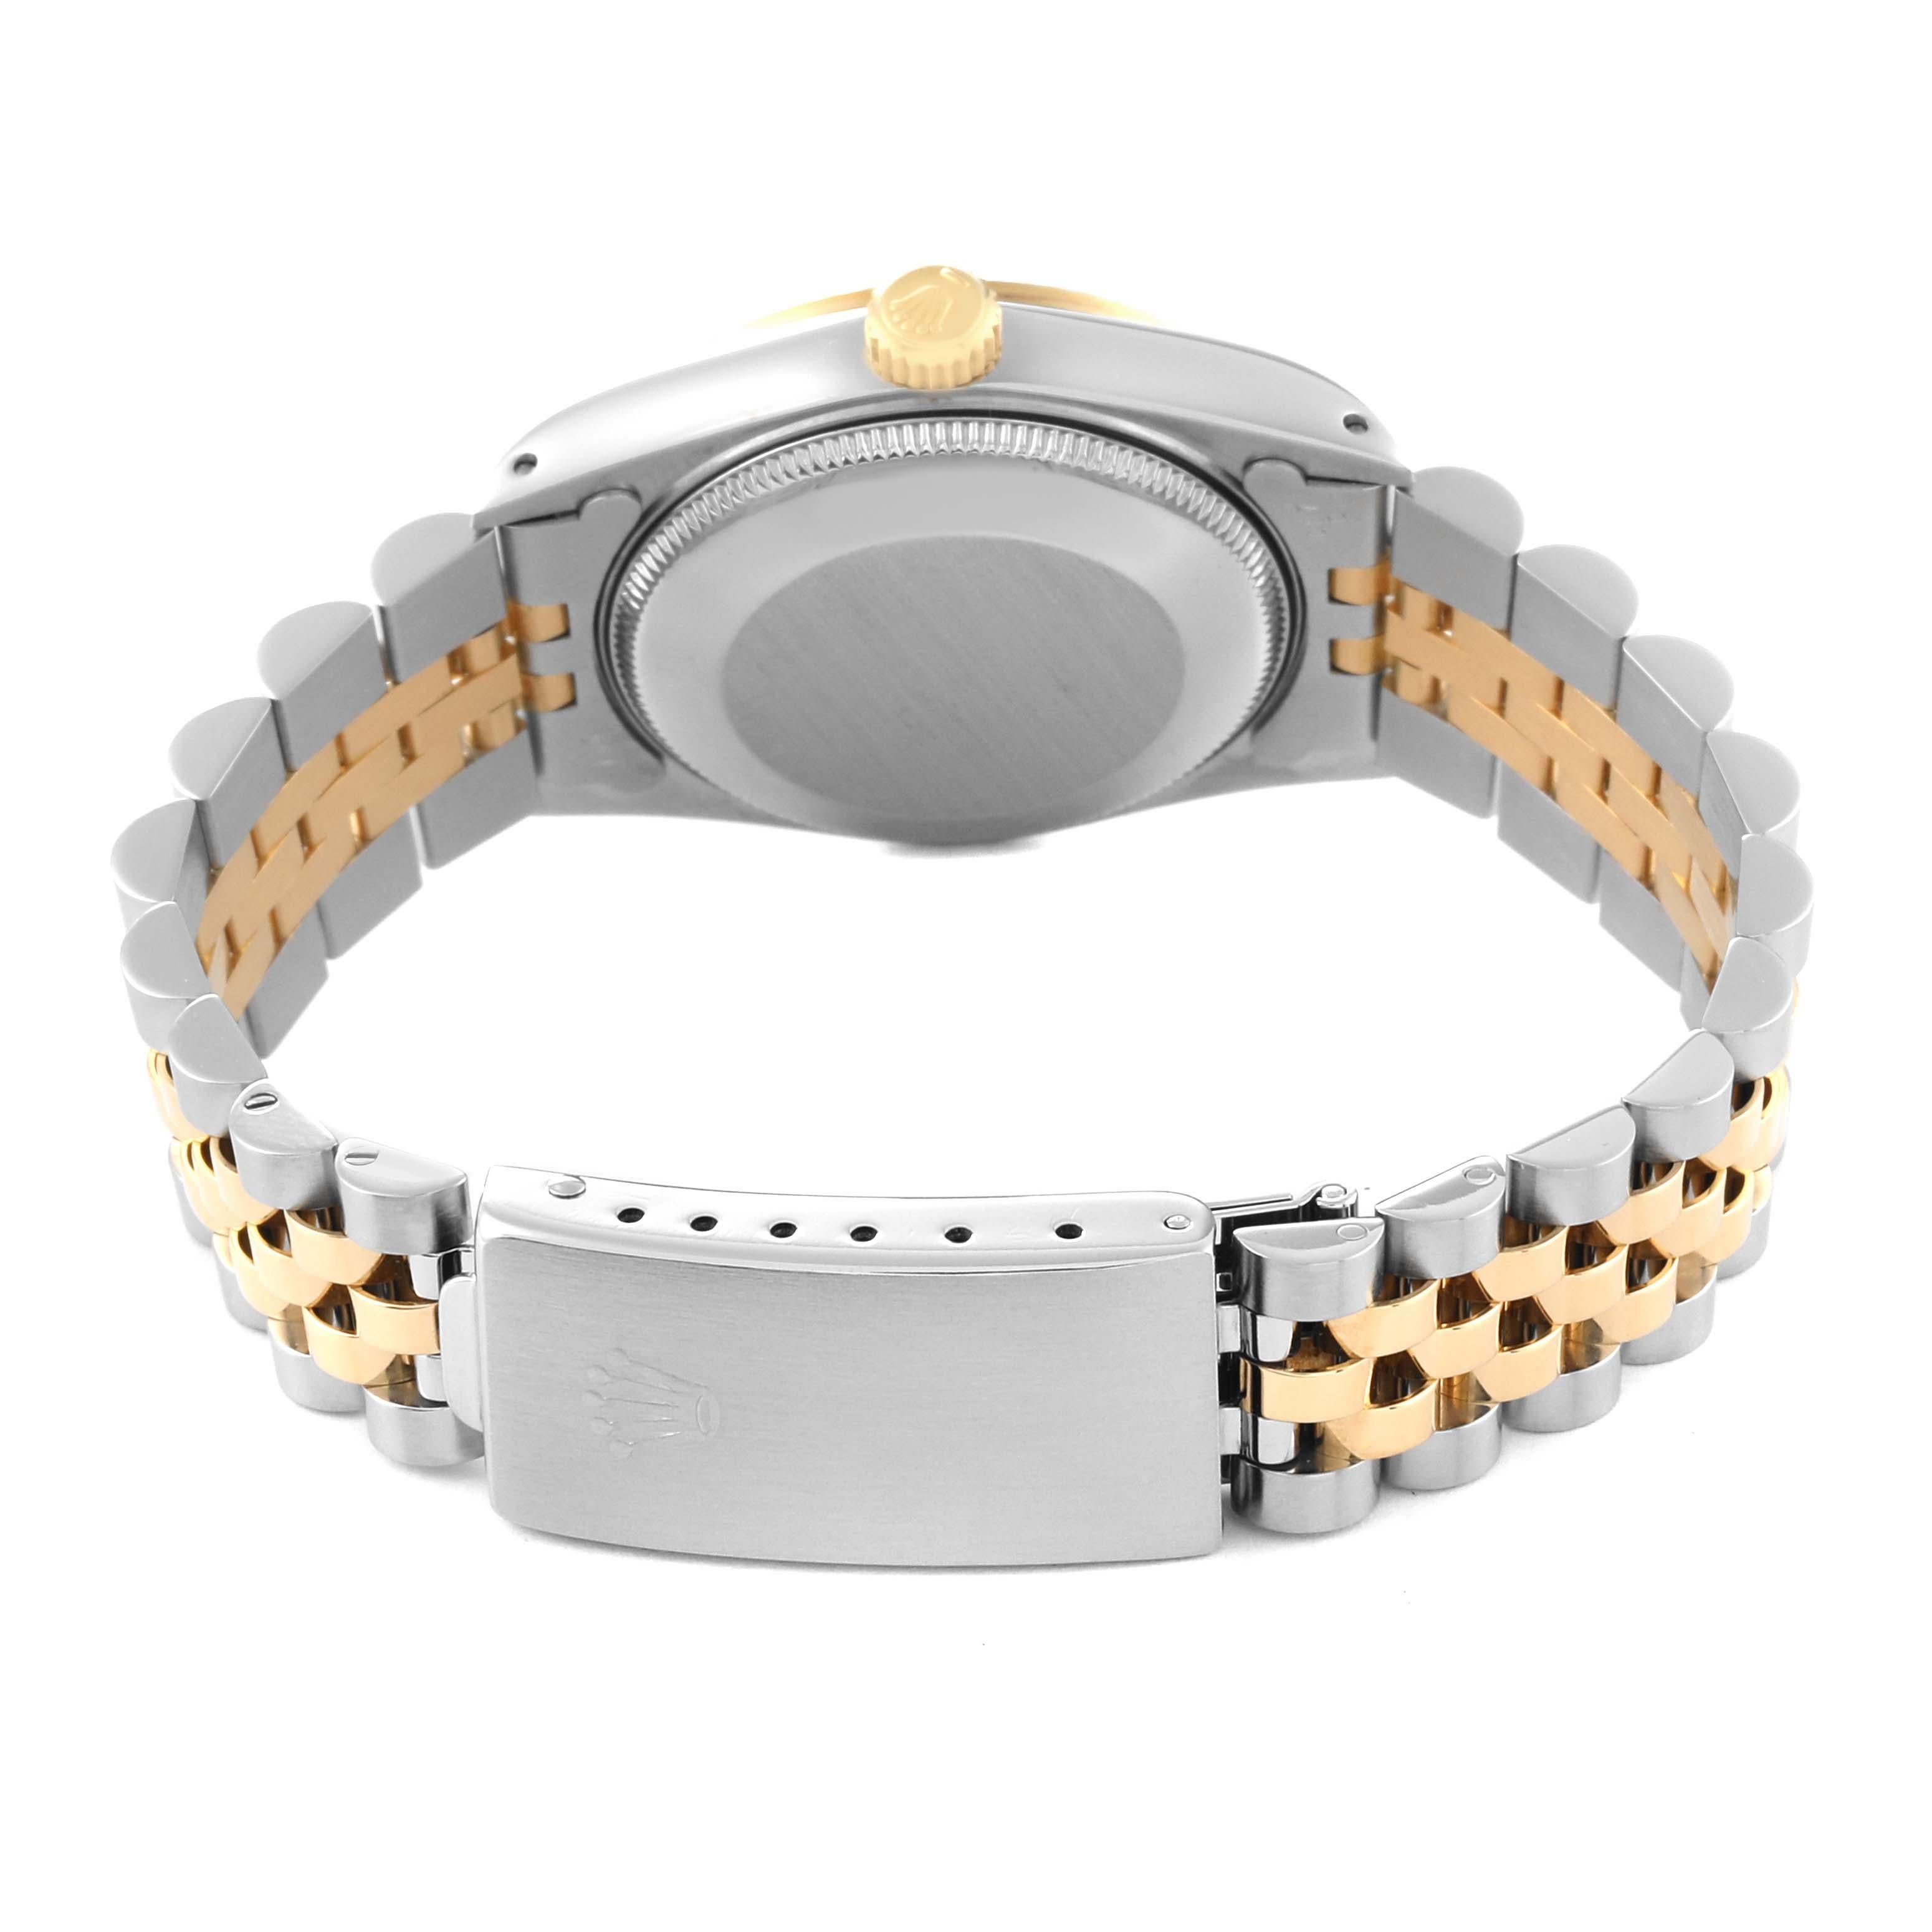 Rolex Datejust Midsize Diamond Dial Steel Yellow Gold Ladies Watch 68273 3